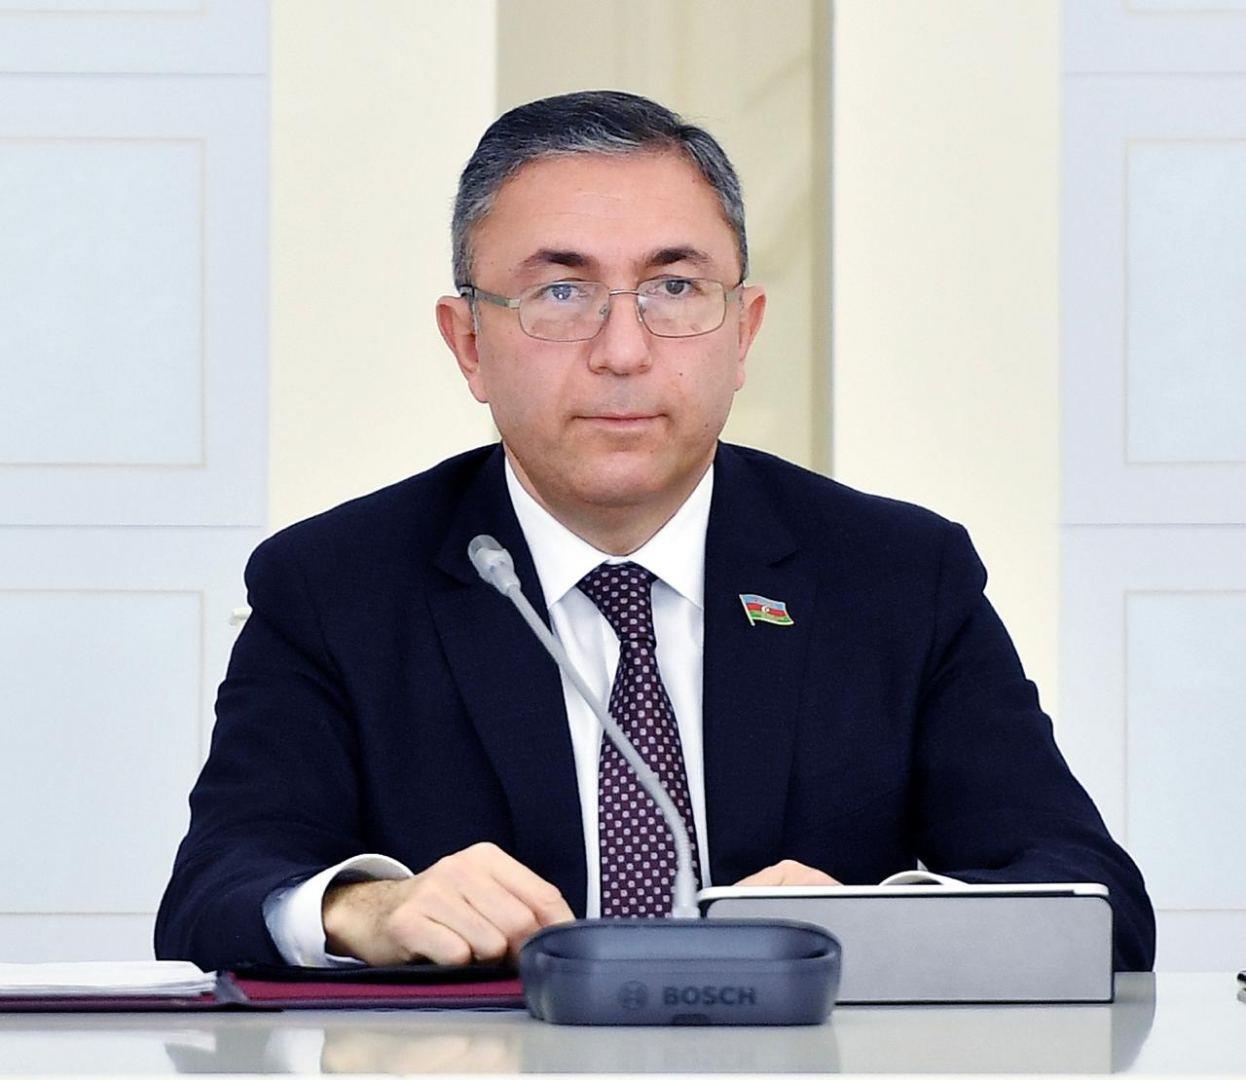 International Astronautical Congress Returns To South Caucasus Region After Half Century - Azerbaijani MP